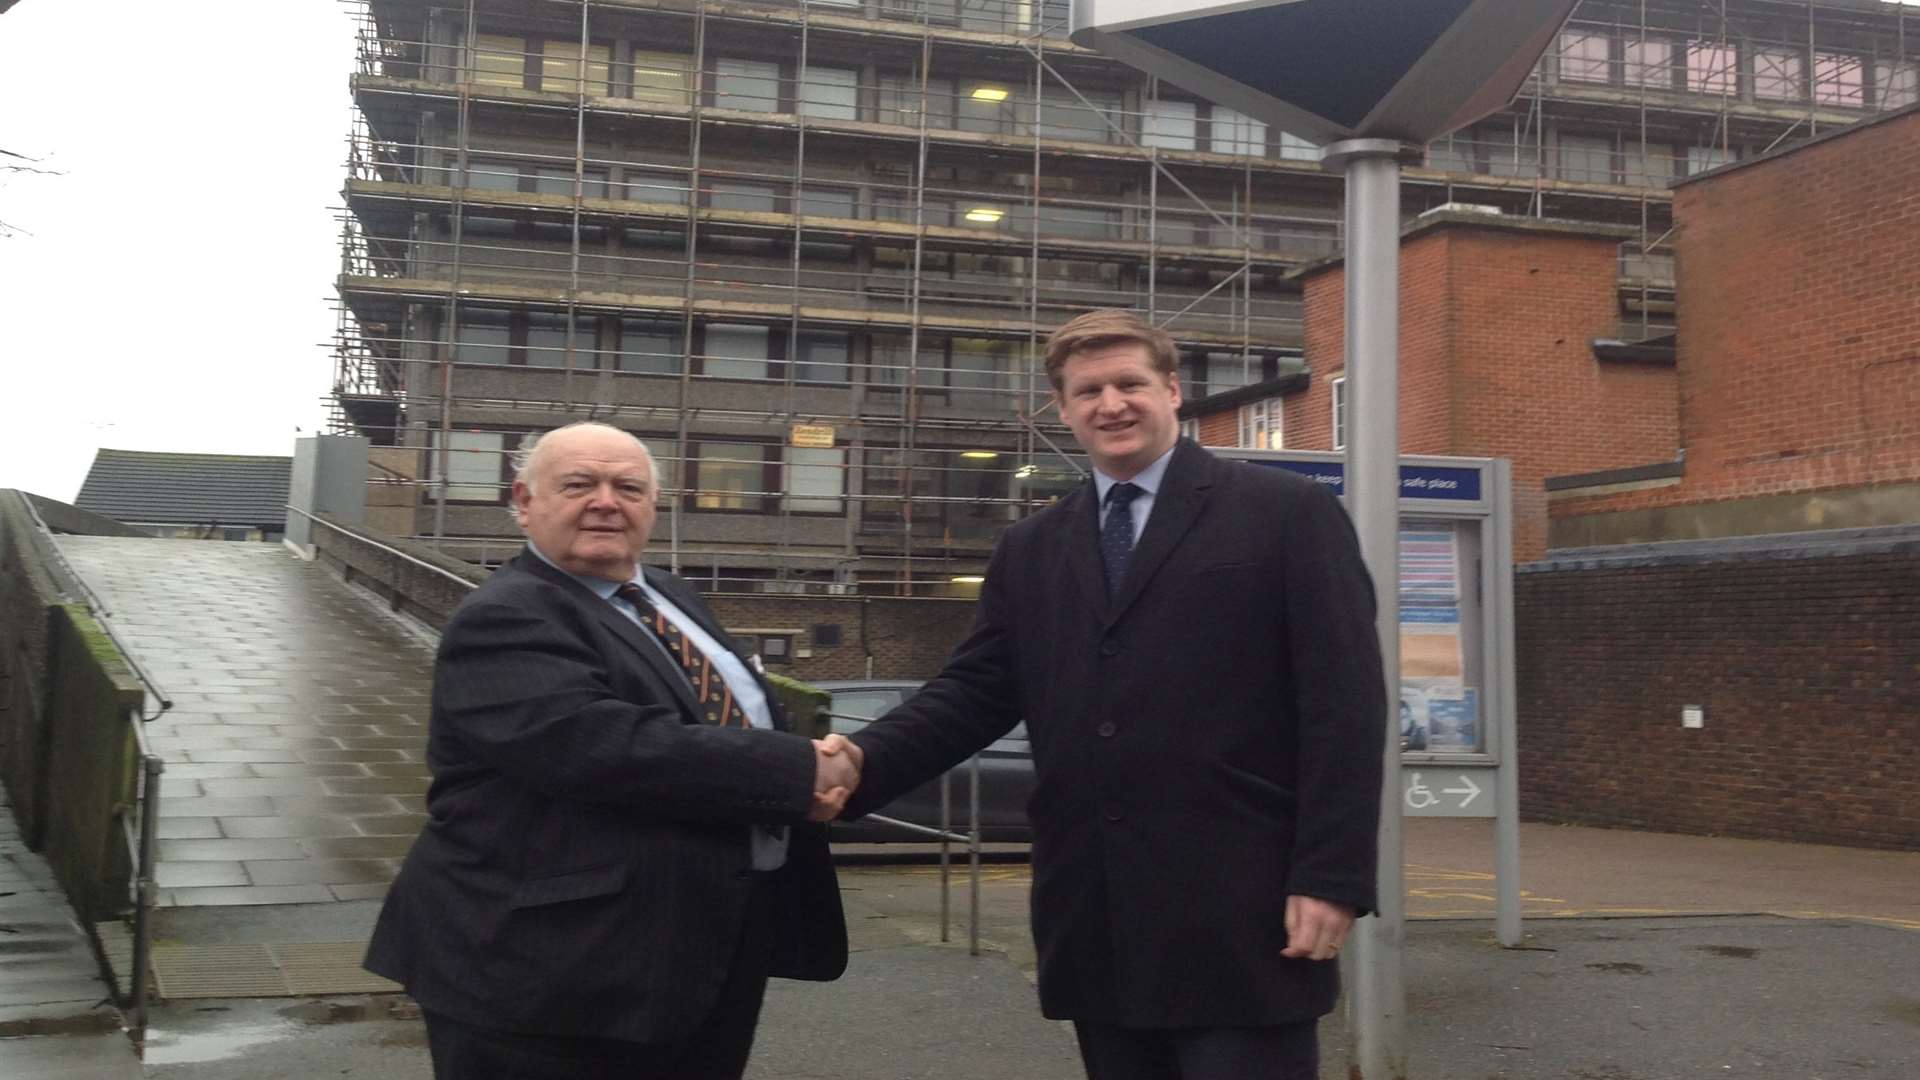 Ashford Borough Council leader Gerry Clarkson and Kent PCC Matthew Scott this morning.